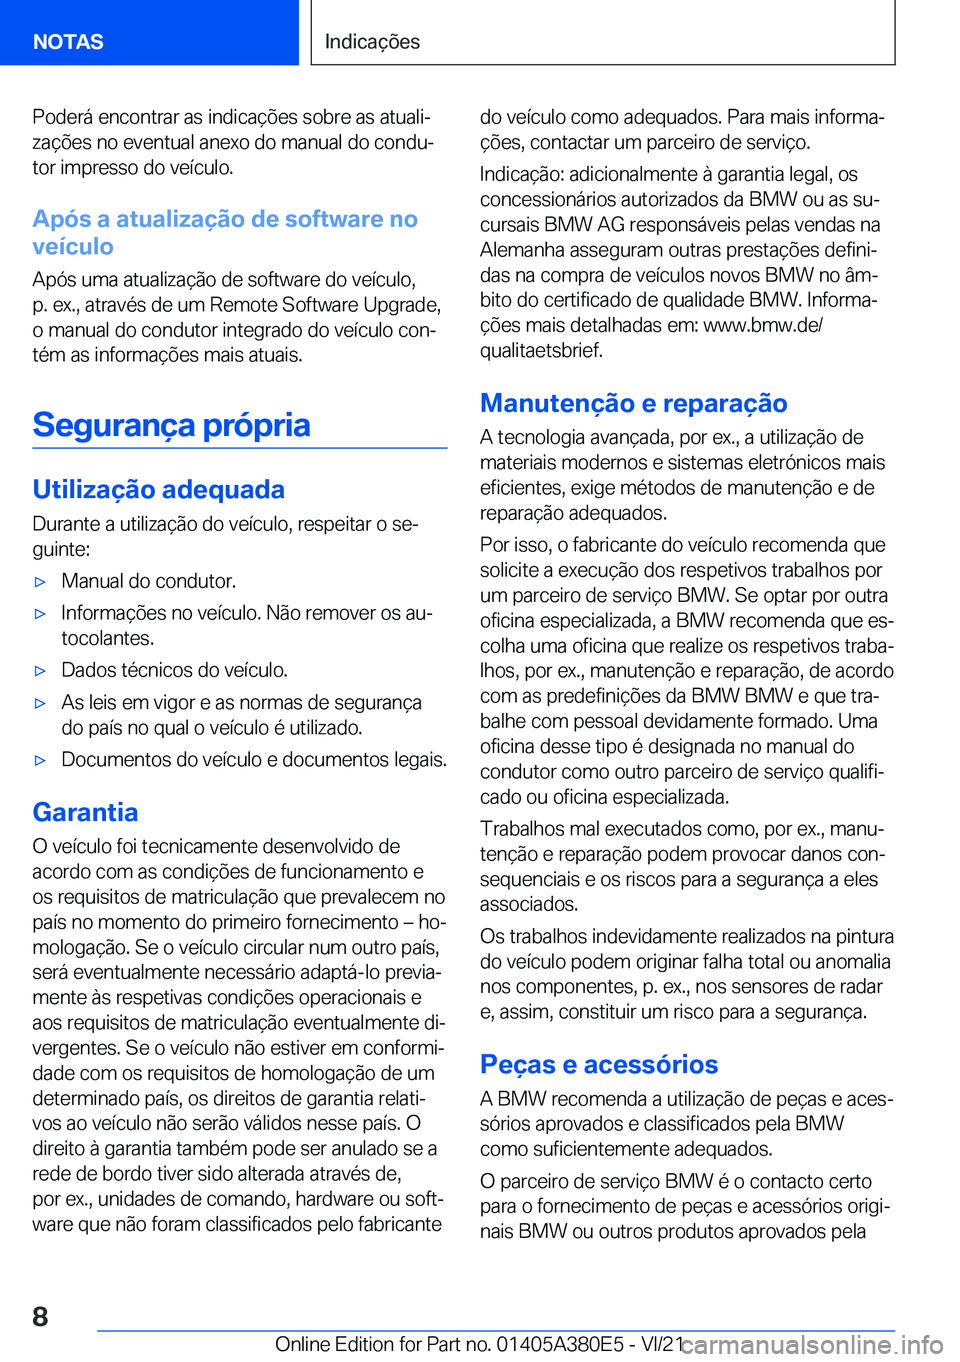 BMW 5 SERIES 2022  Manual do condutor (in Portuguese) �P�o�d�e�r�á��e�n�c�o�n�t�r�a�r��a�s��i�n�d�i�c�a�